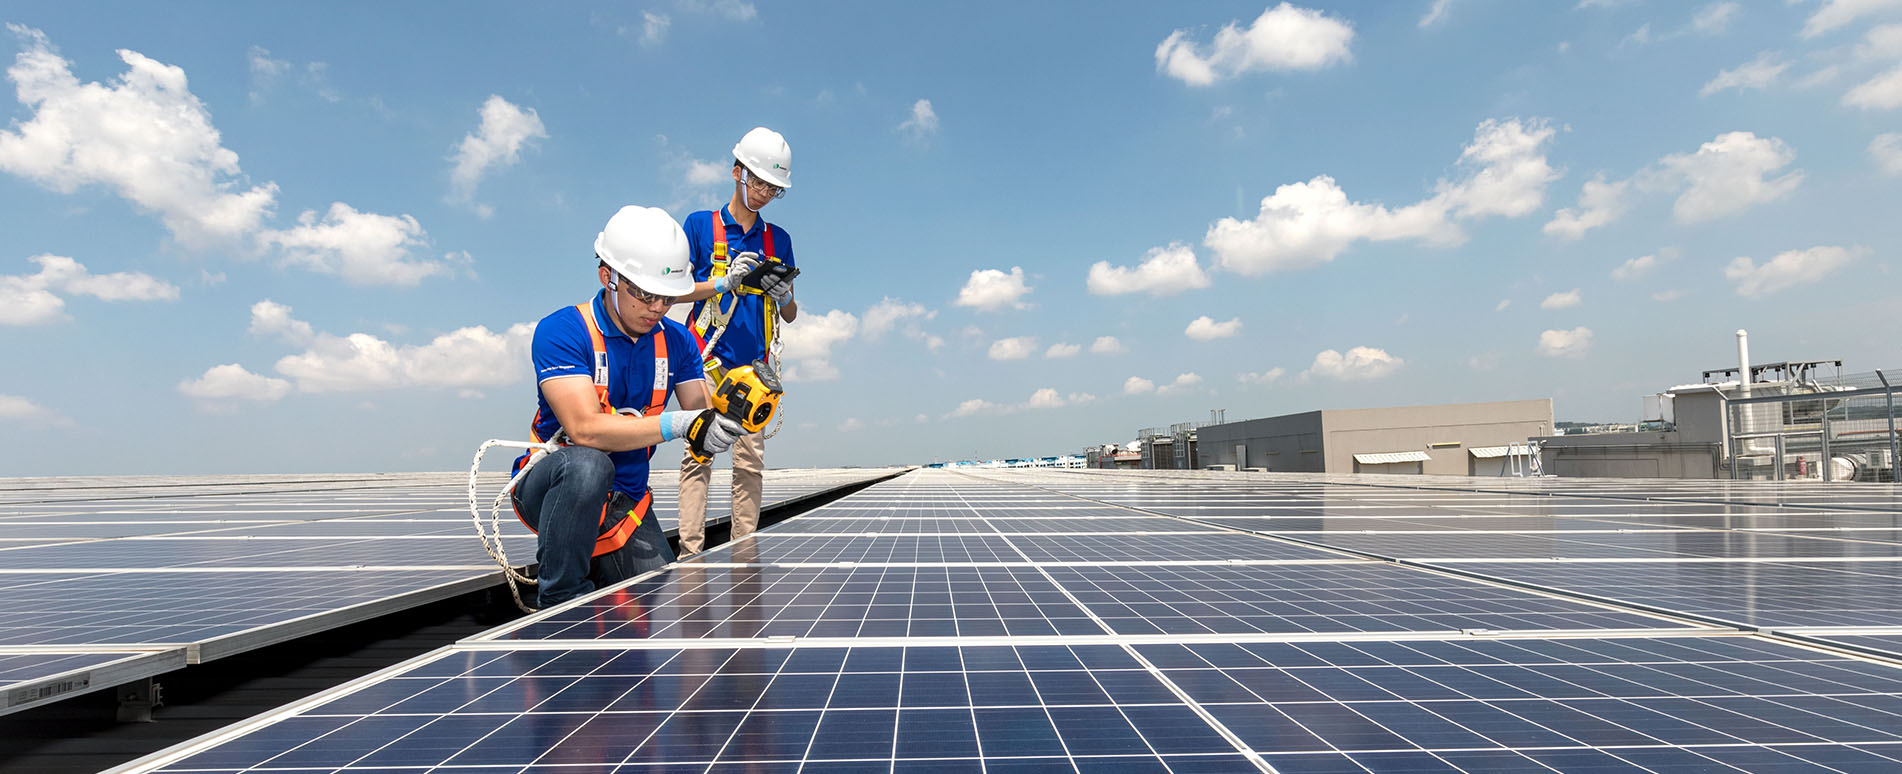 Residential Solar Power System Solutions